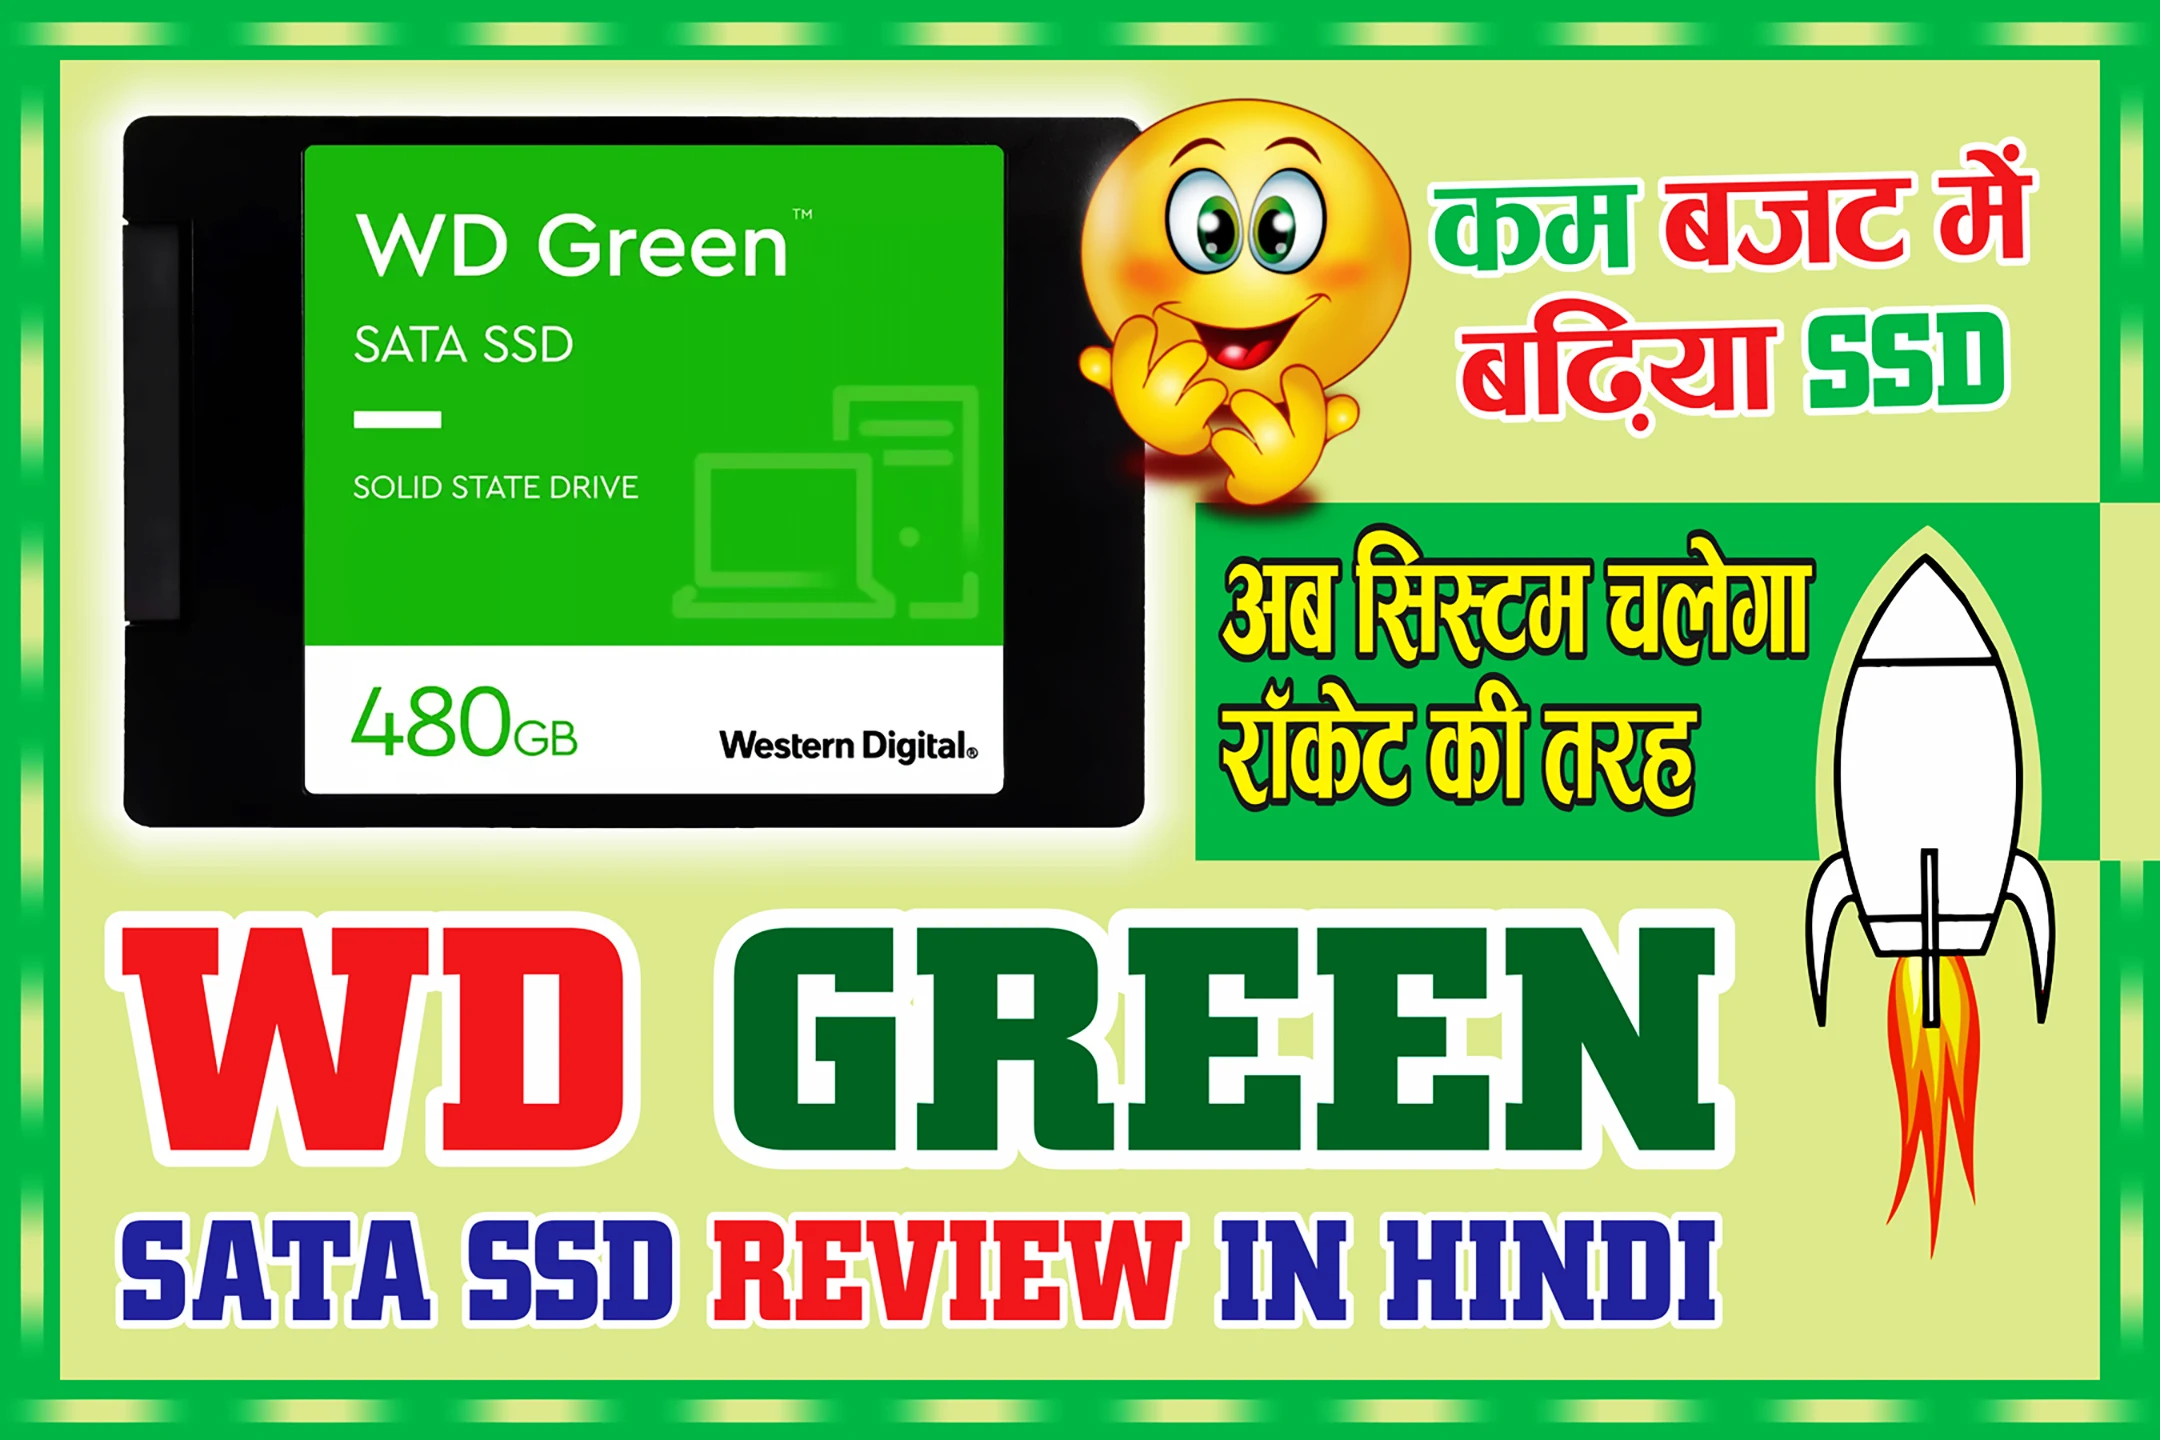 wd-green-sata-ssd-in-hindi